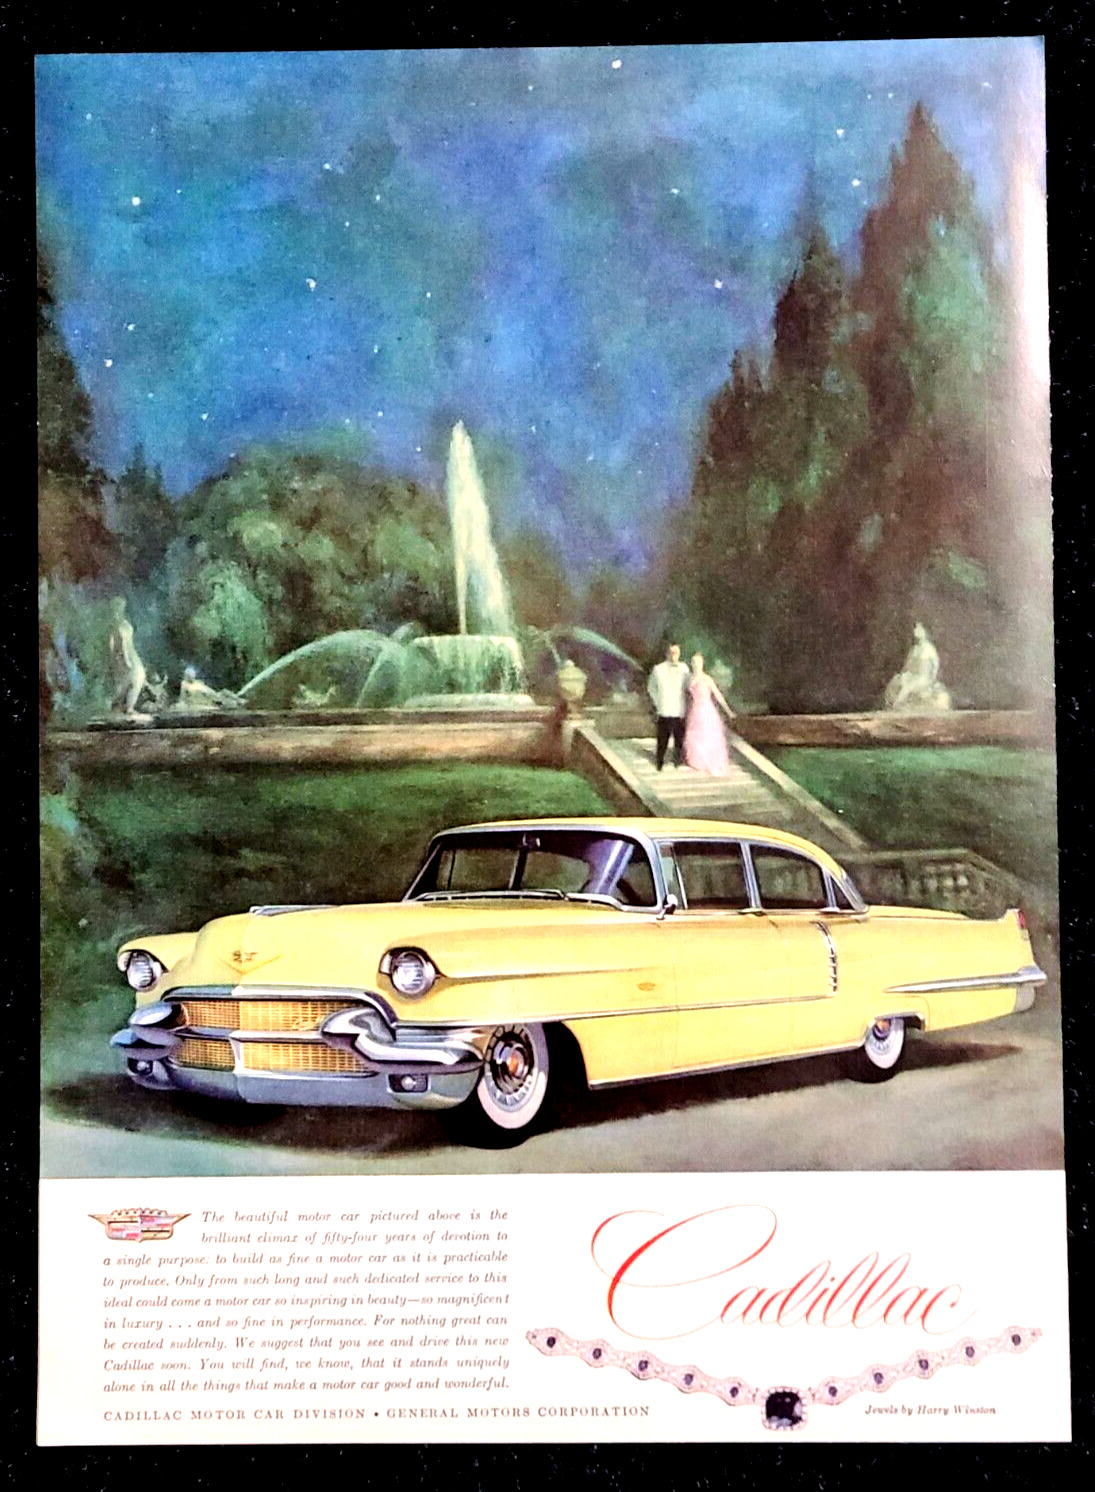 Yellow Cadillac 4-Door 1956 Vintage Print Ad